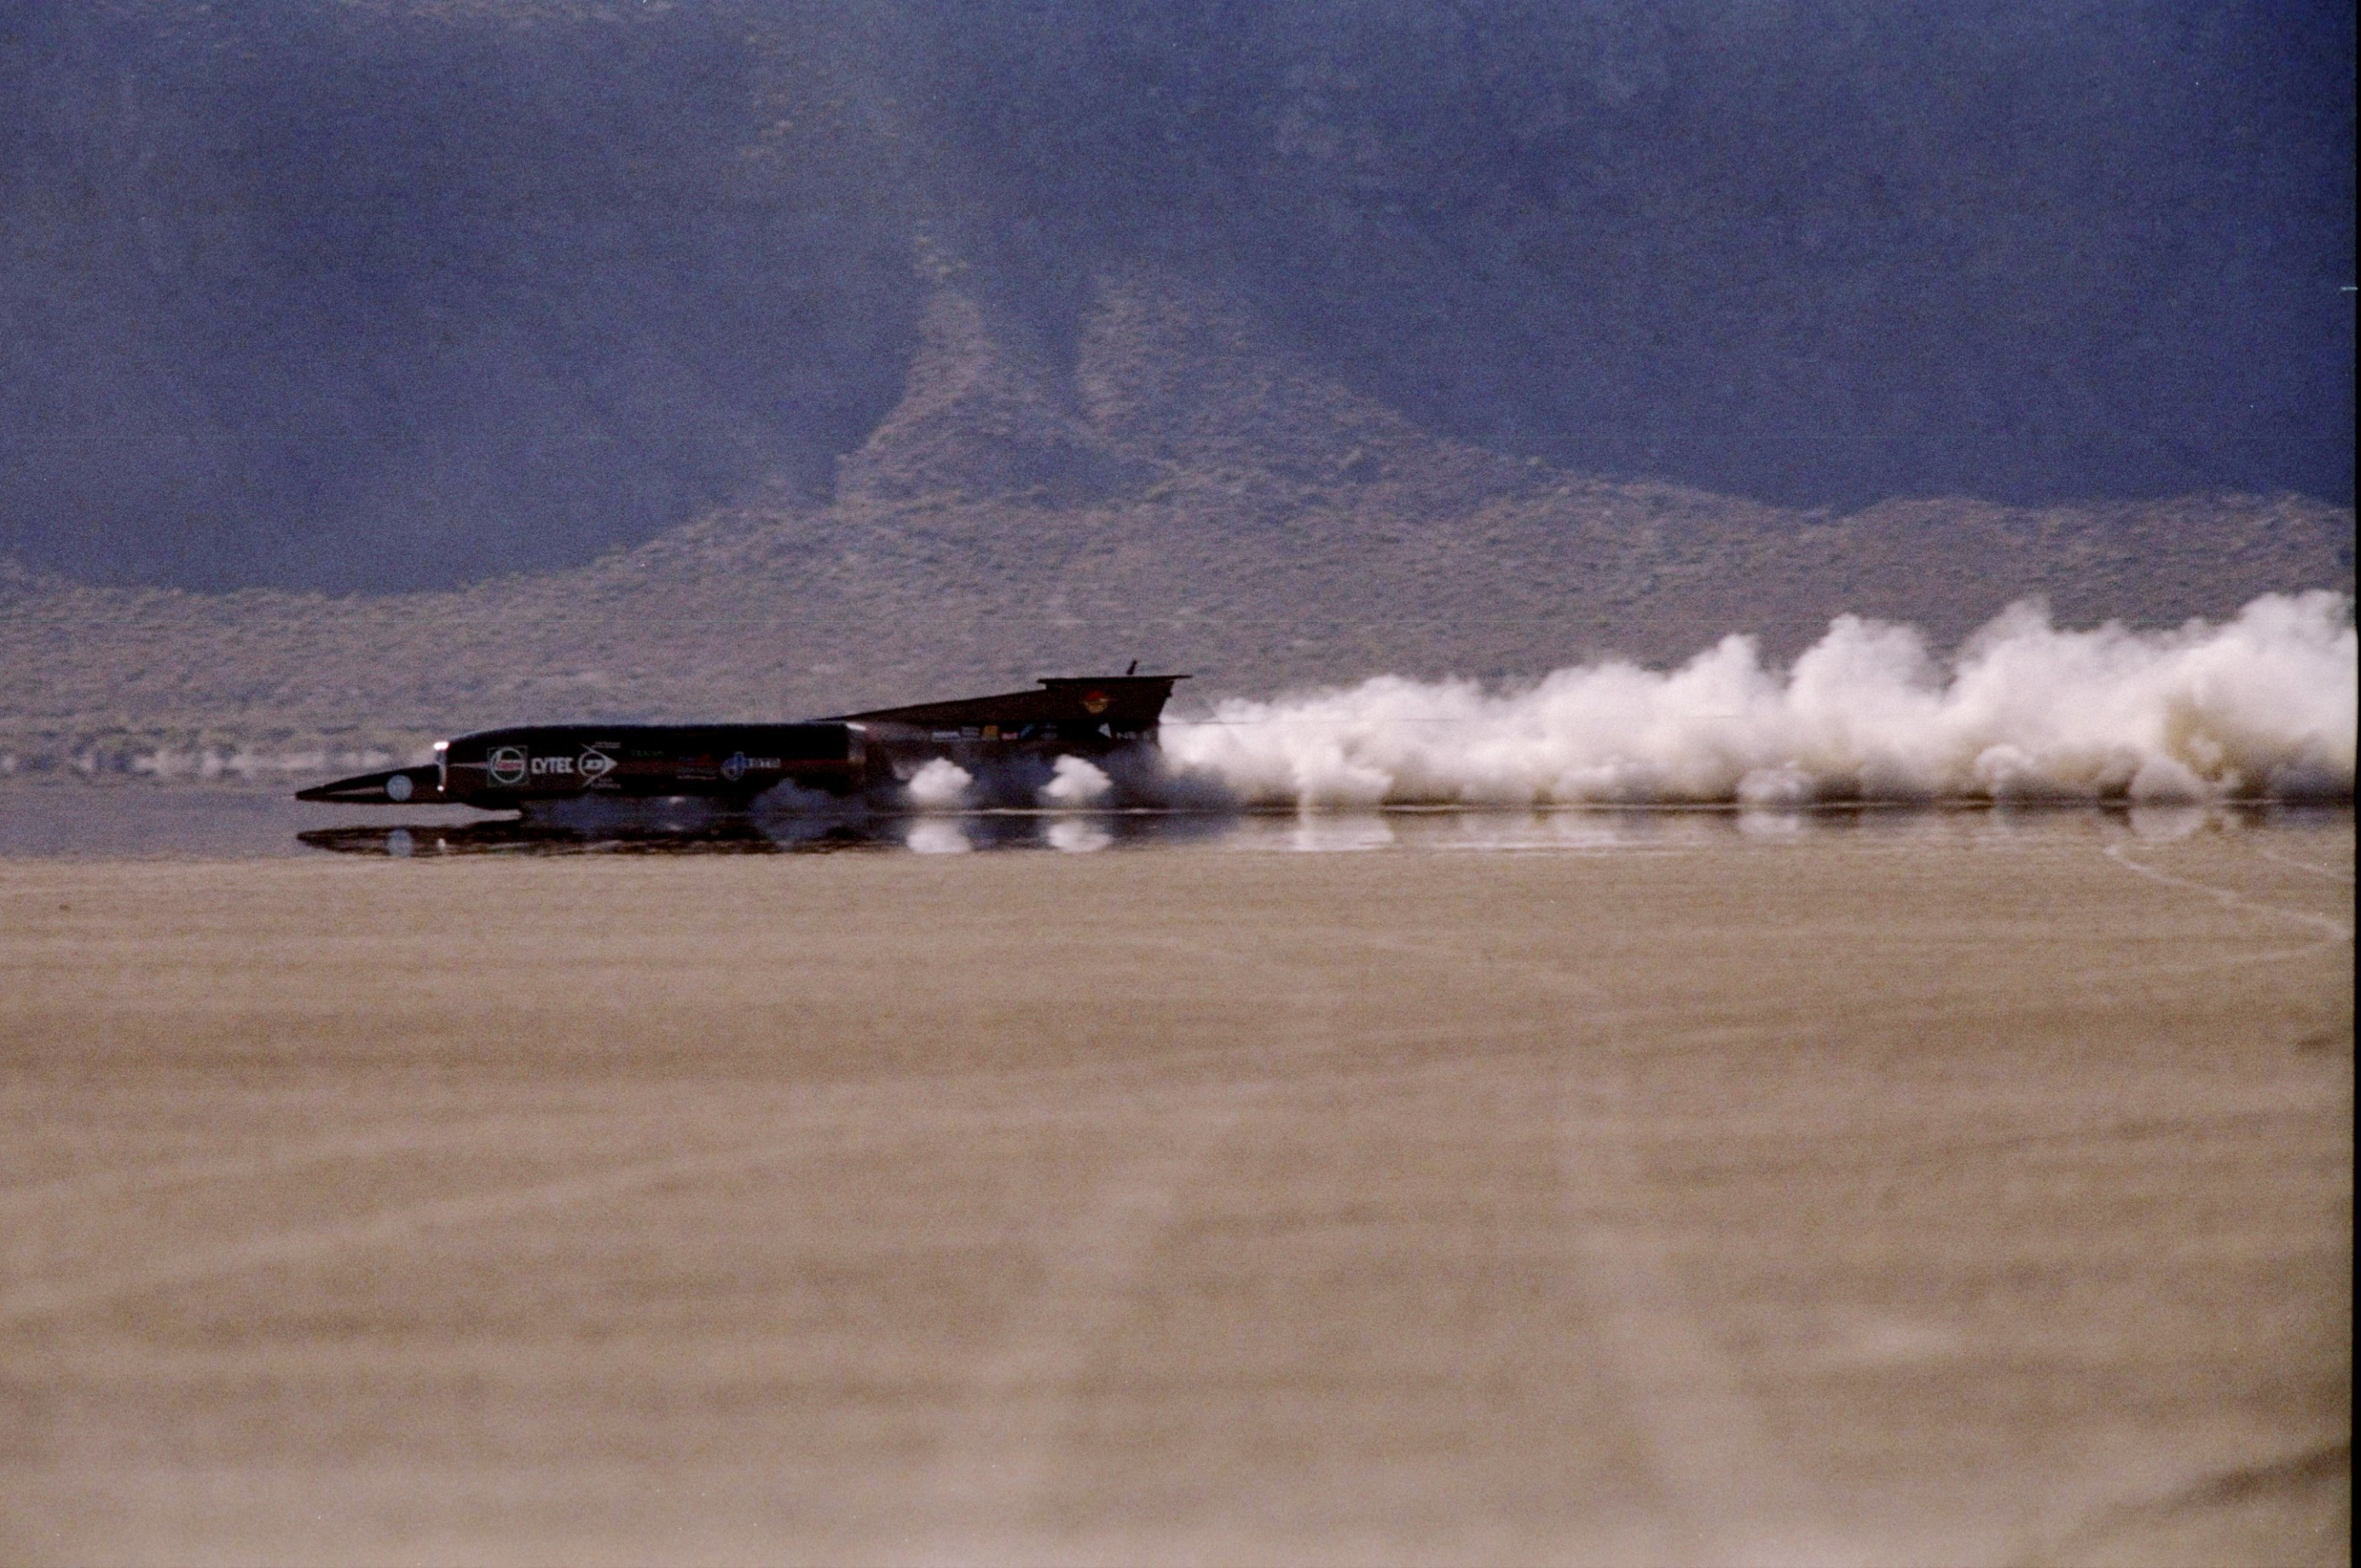 The Thrust SSC Land Speed Racer races down the Nevada desert floor.